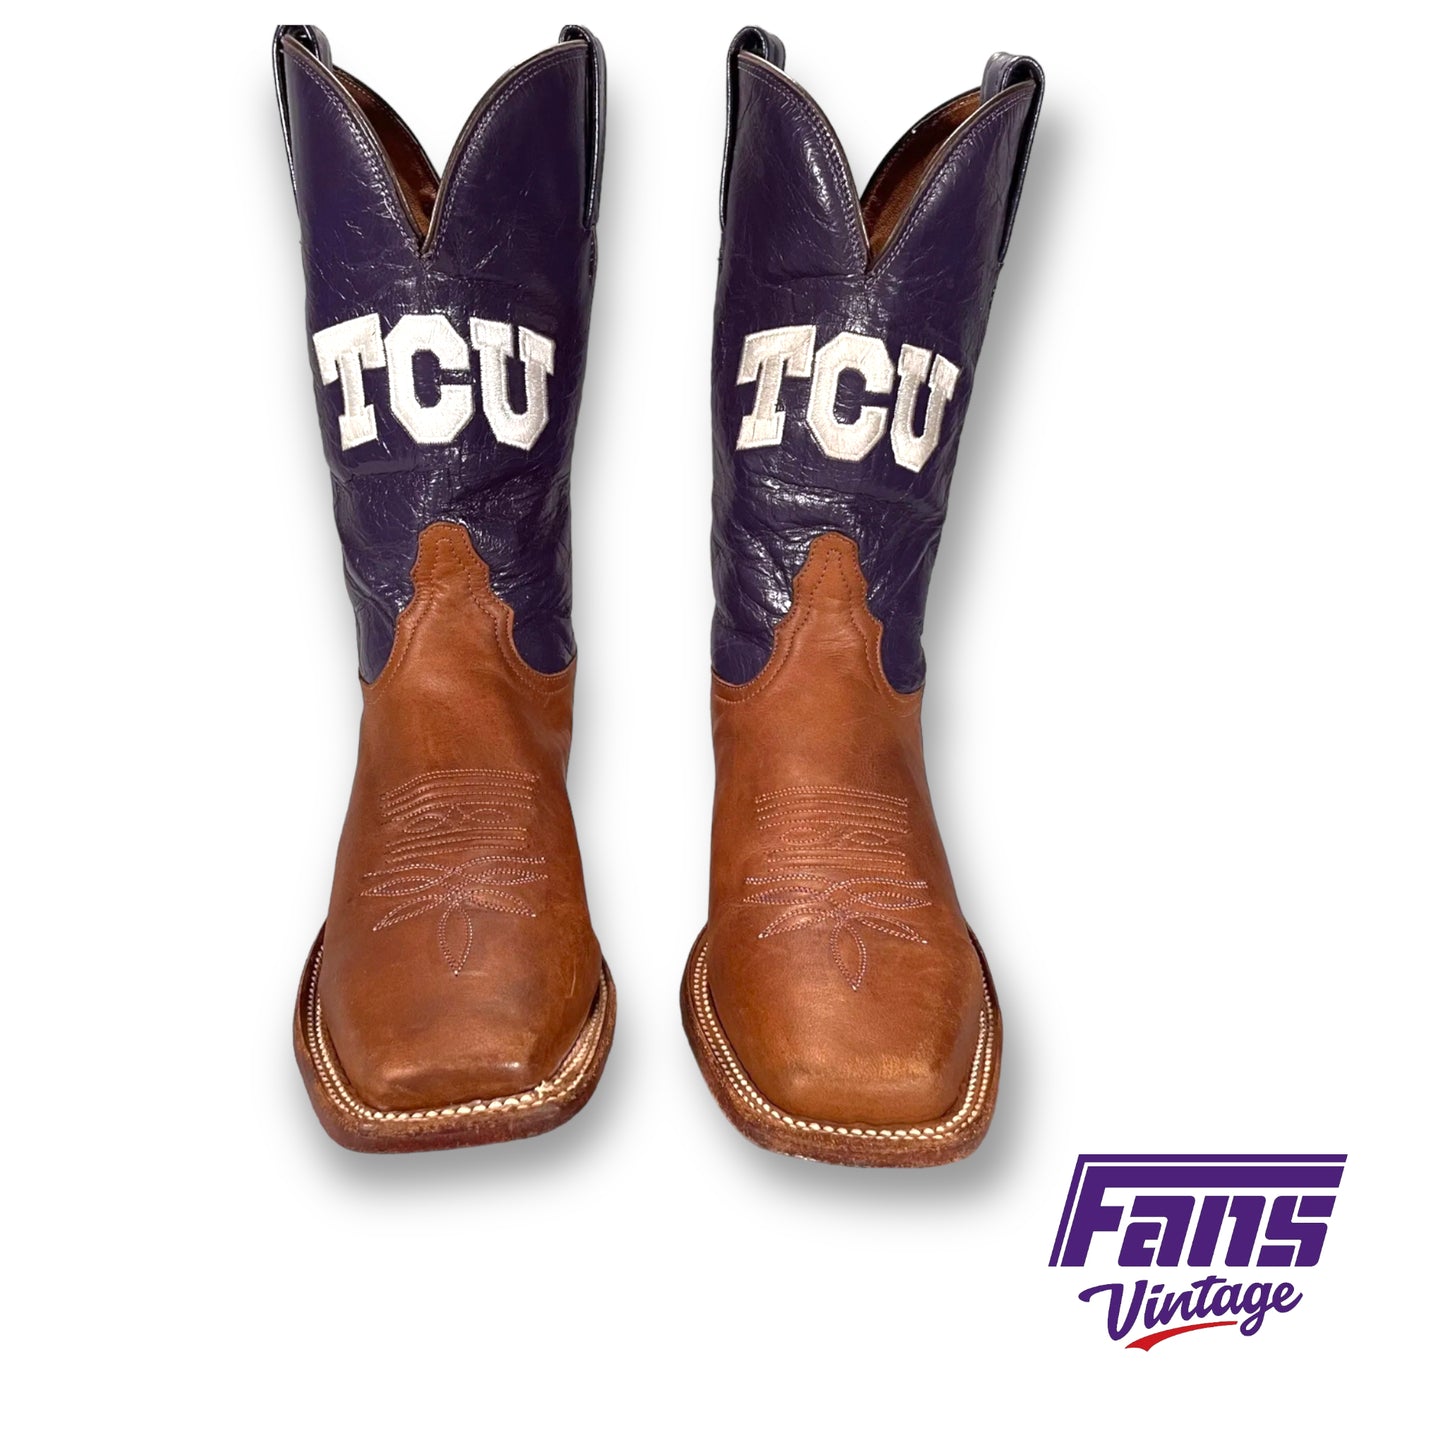 Custom TCU Cowboy Boots by Tony Lama